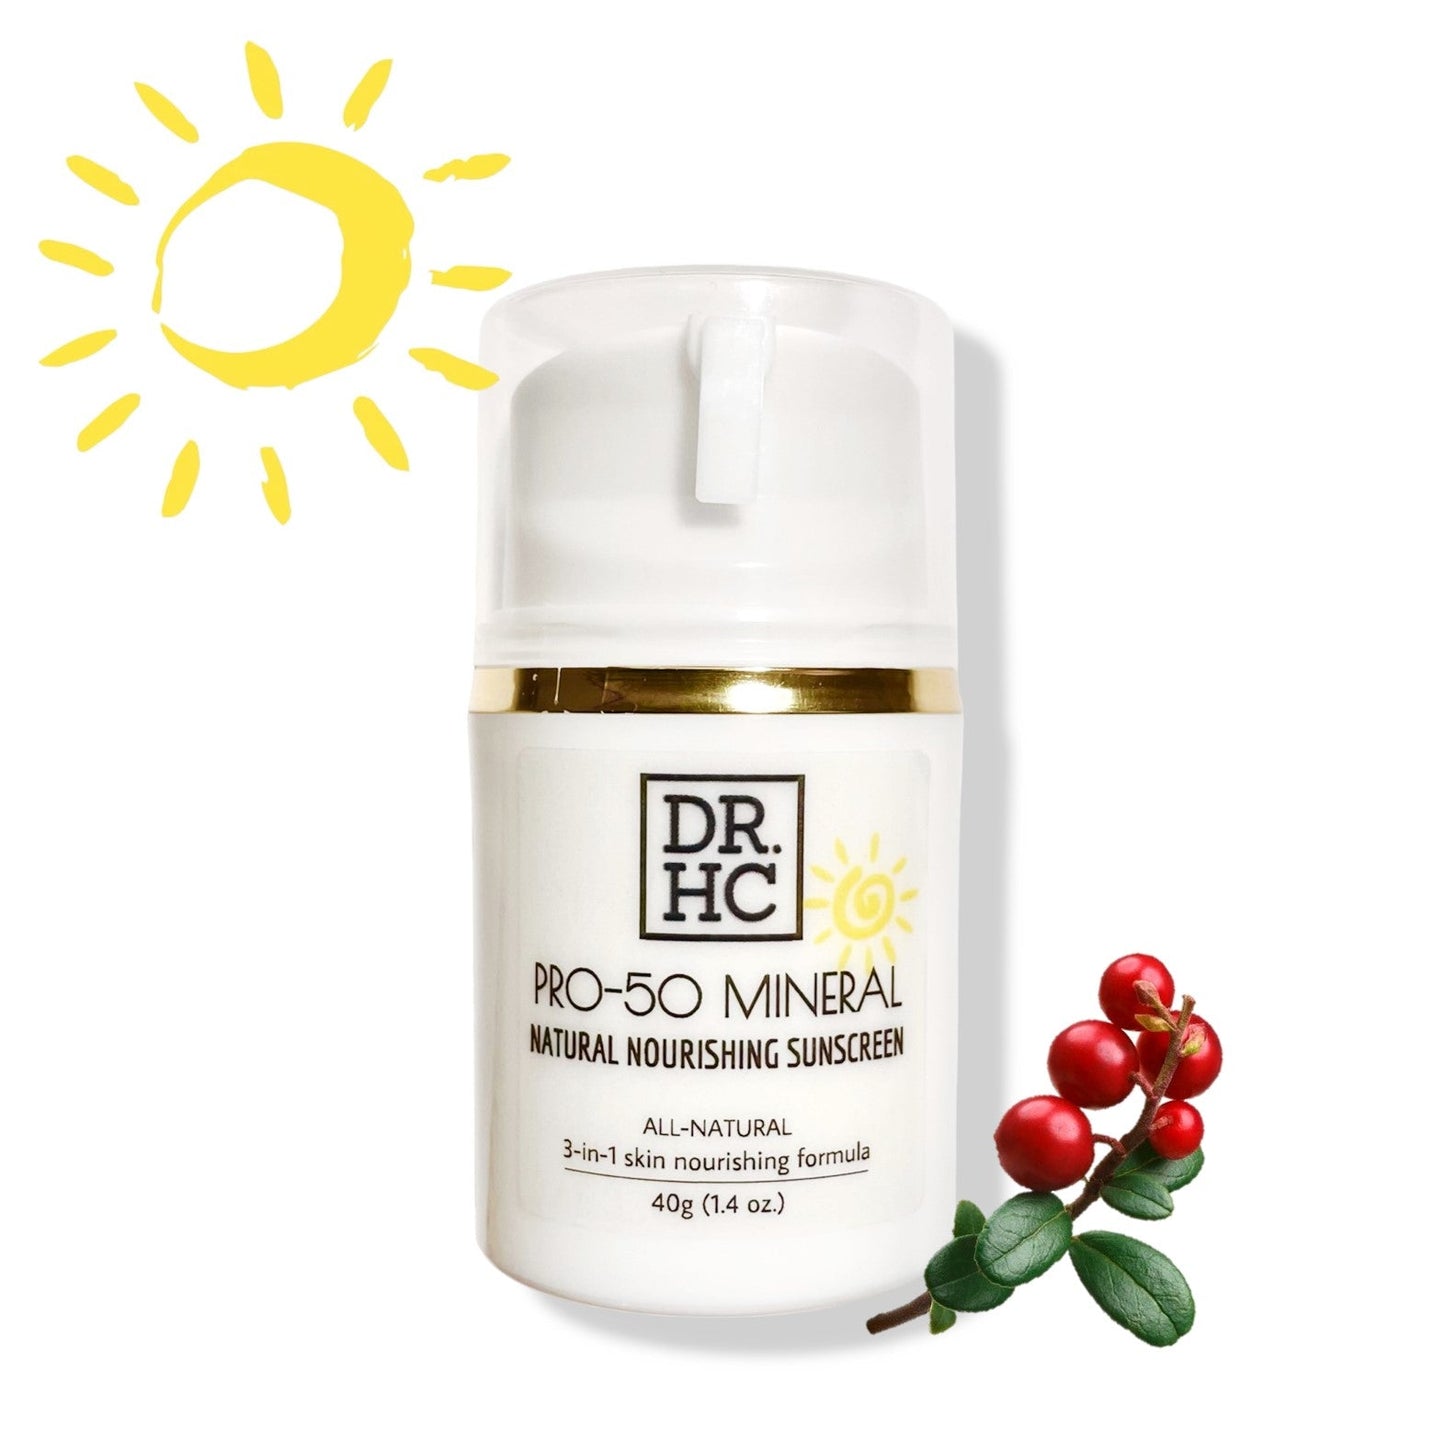 DR.HC Pro-50 Mineral Natural Nourishing Sunscreen (40g, 1.4oz.) (Natural UV Care, Skin brightening, Anti-aging, Damage Repair, Anti-inflammatory...)-3